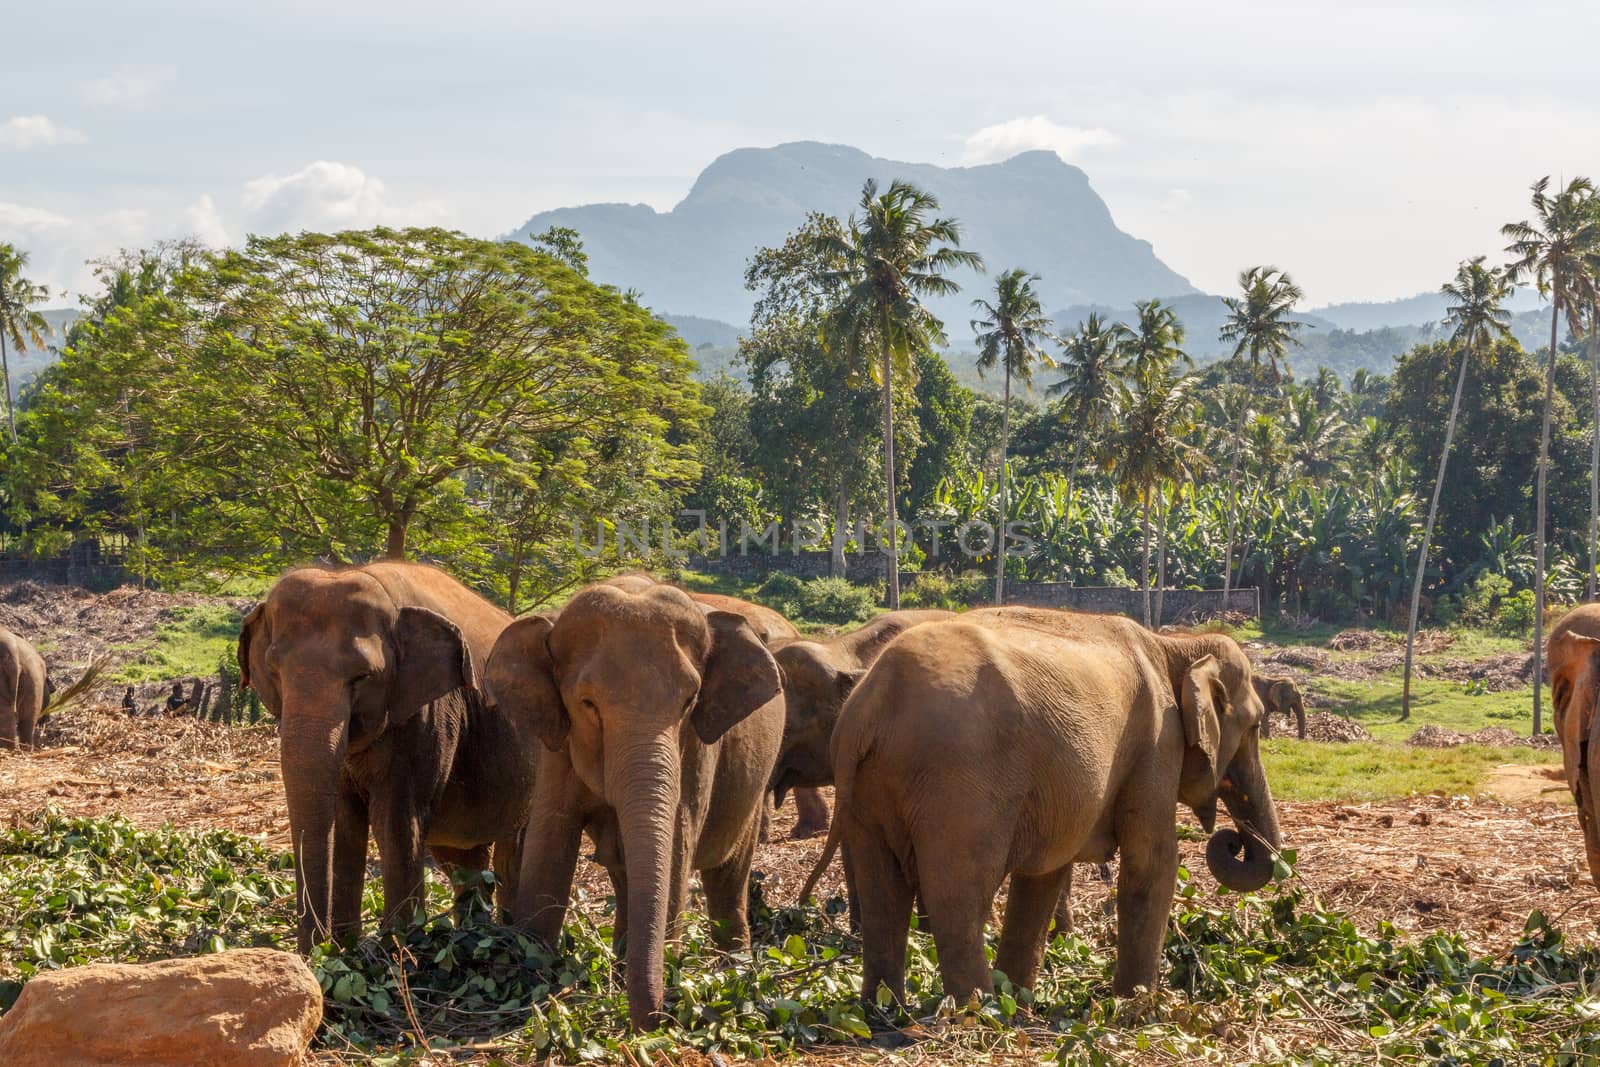 Elephant herd made up of female elephants and juvenile elephants grazing and enjoying the beautiful whether. by dugulan